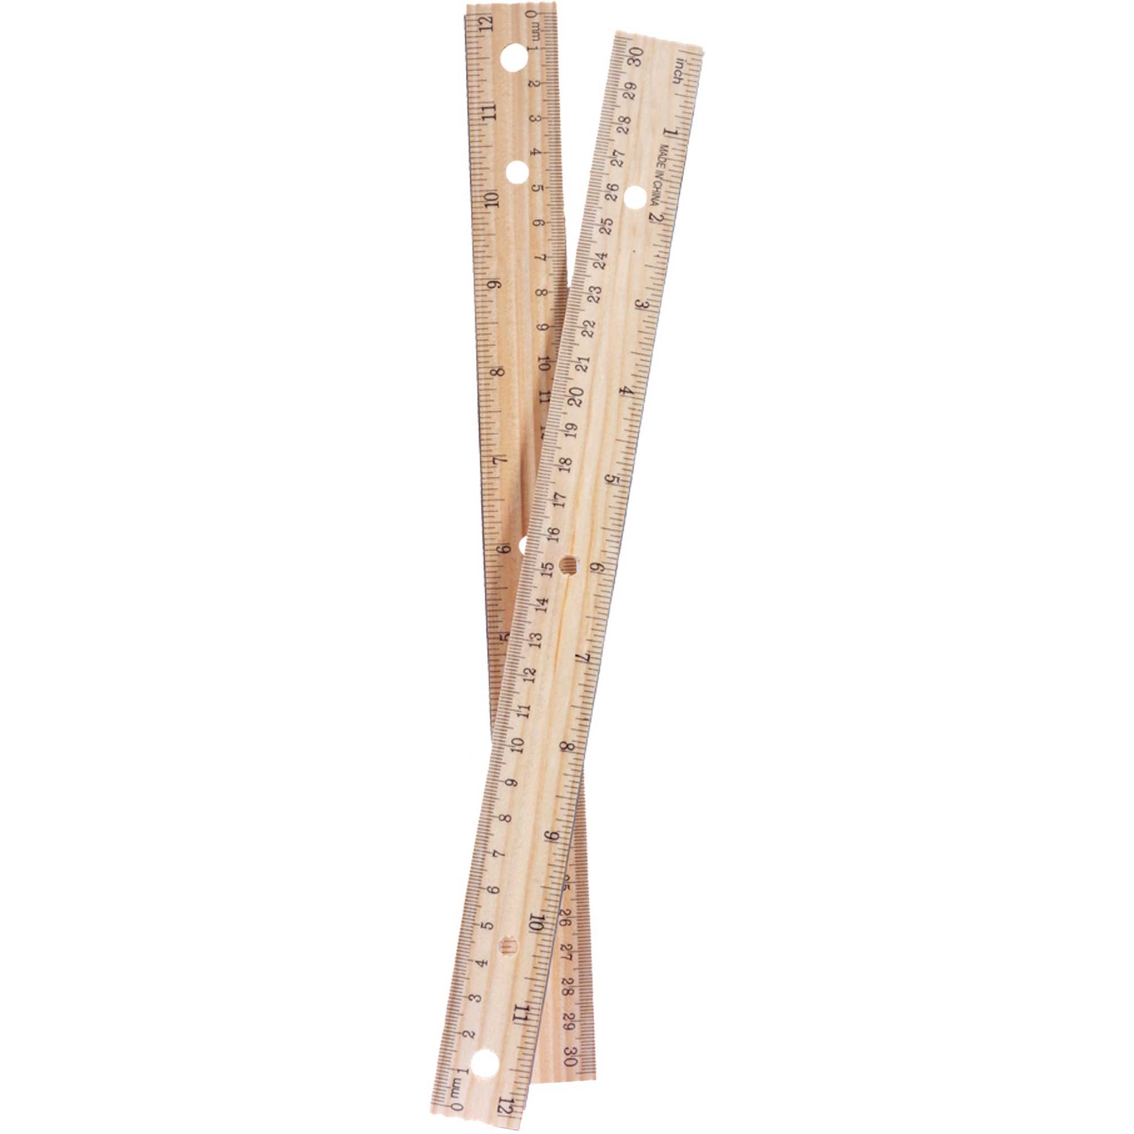 Wood Ruler, Inch and Metric